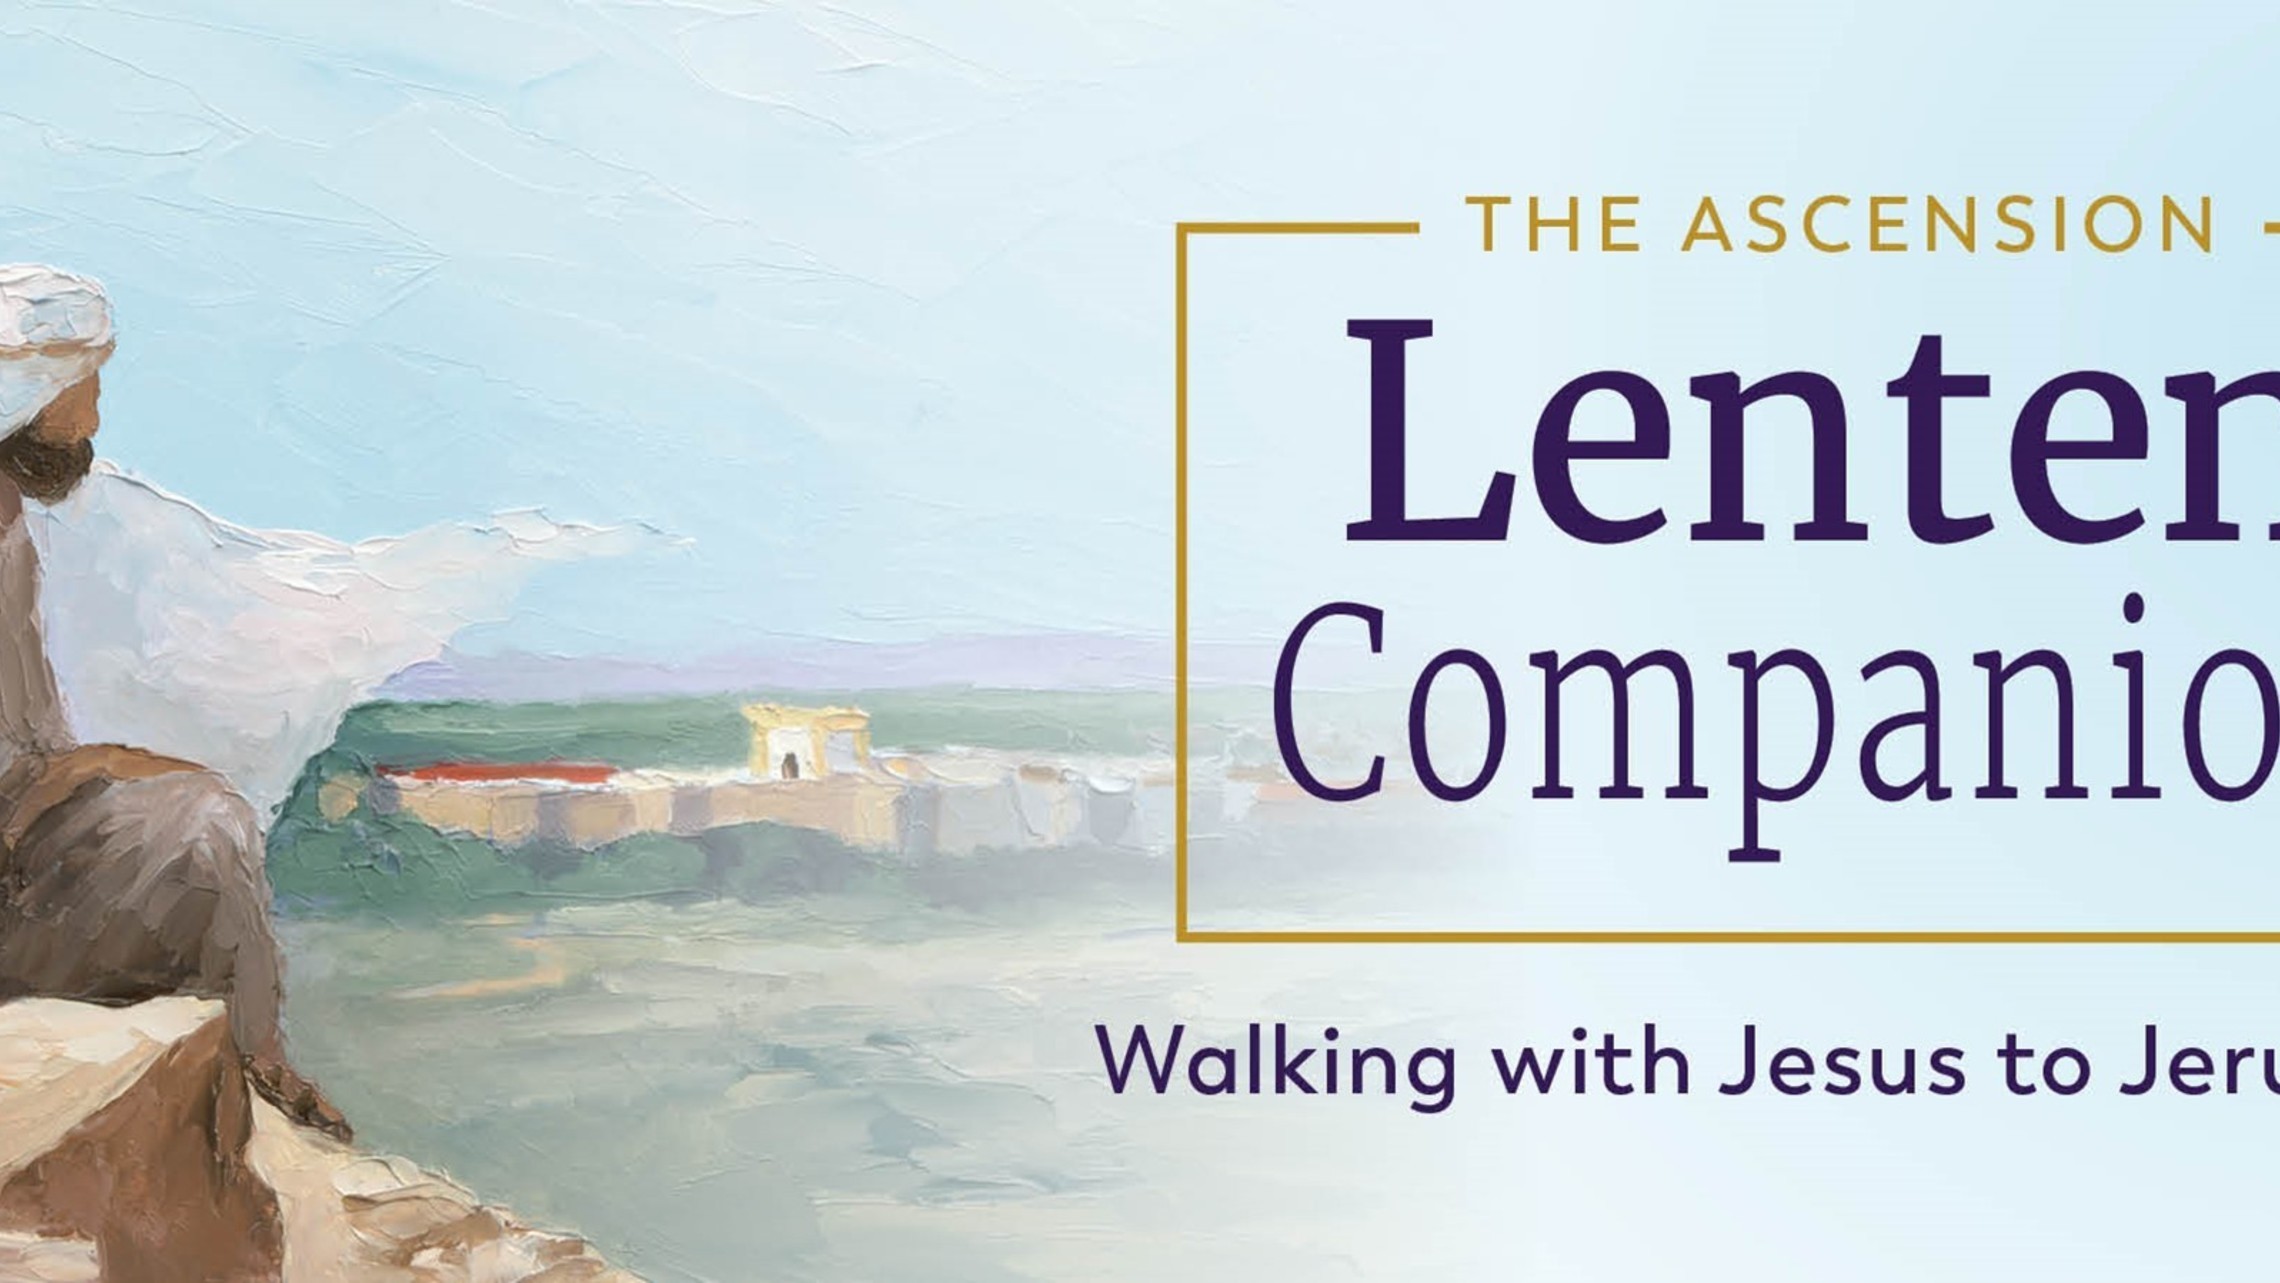 Lenten Companion Walking With Jesus To Jerusalem